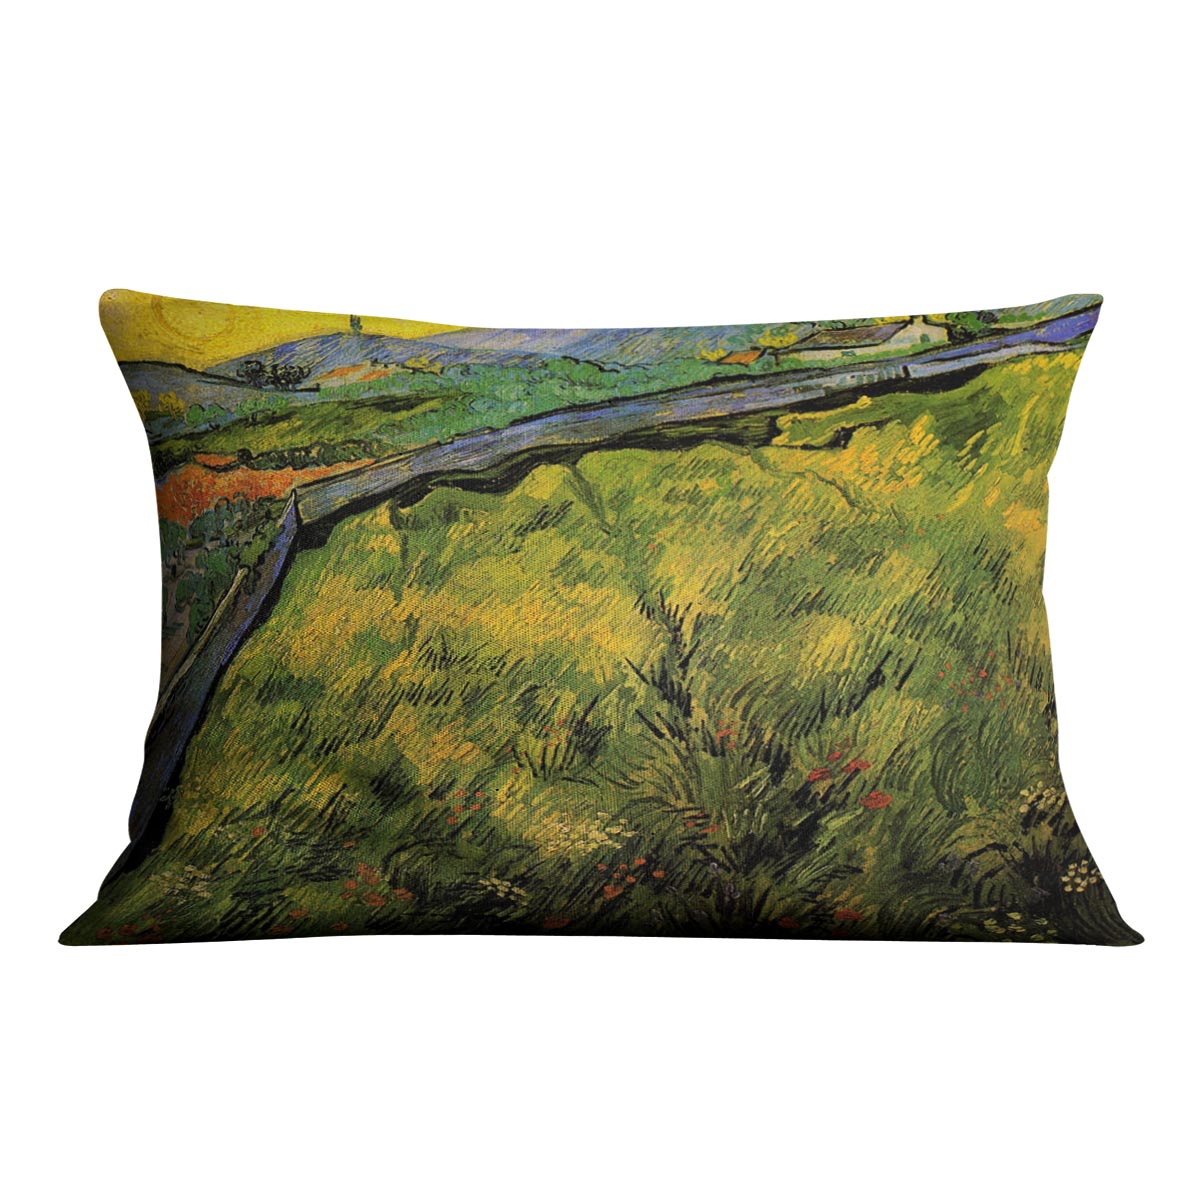 Field of Spring Wheat at Sunrise by Van Gogh Cushion